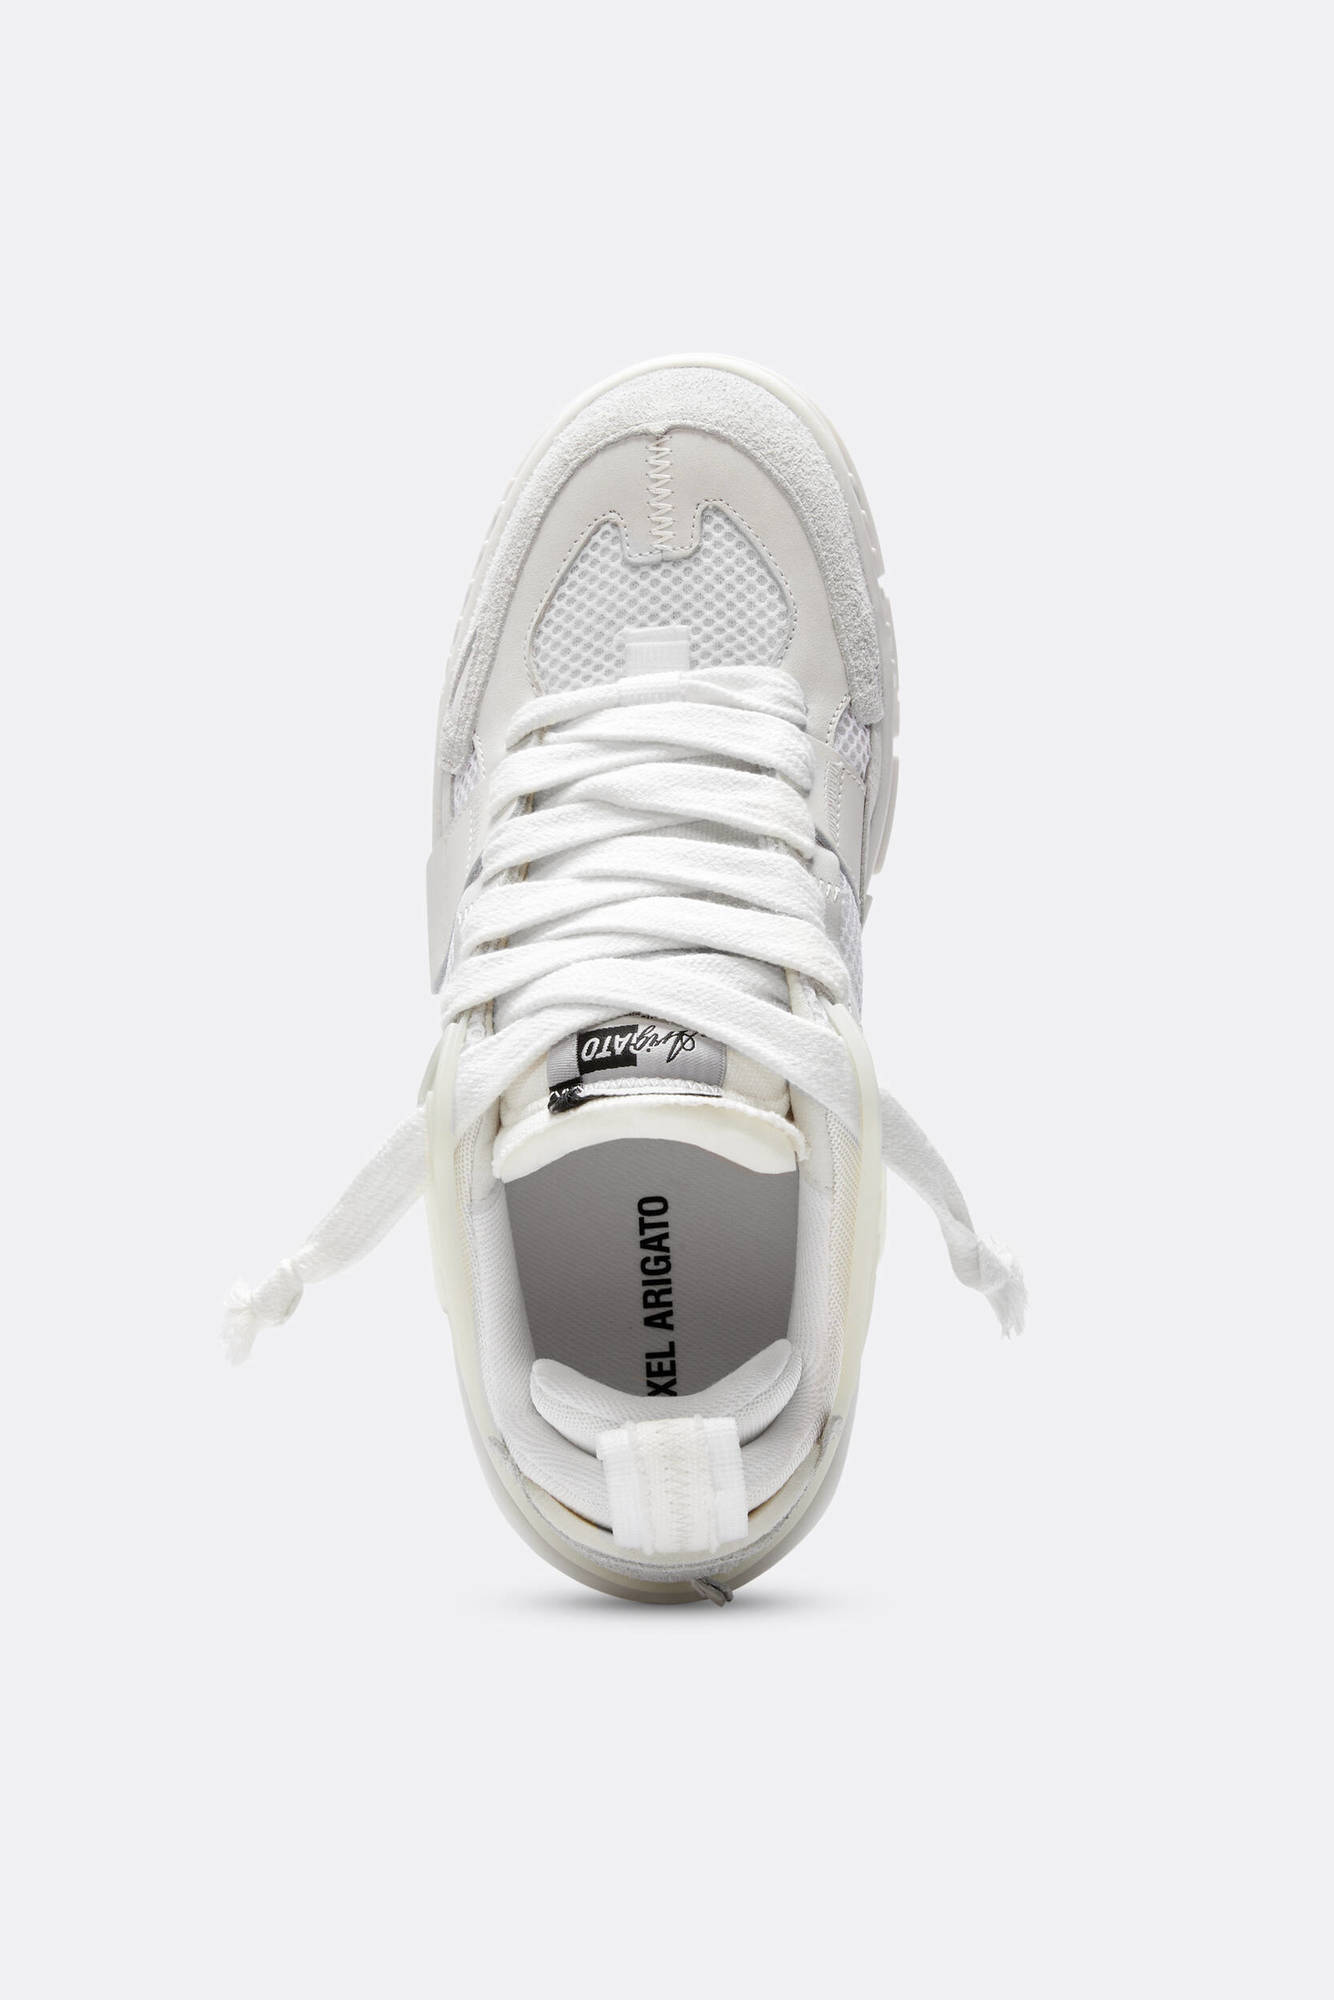 AXEL ARIGATO Area Patchwork Sneaker in White/White